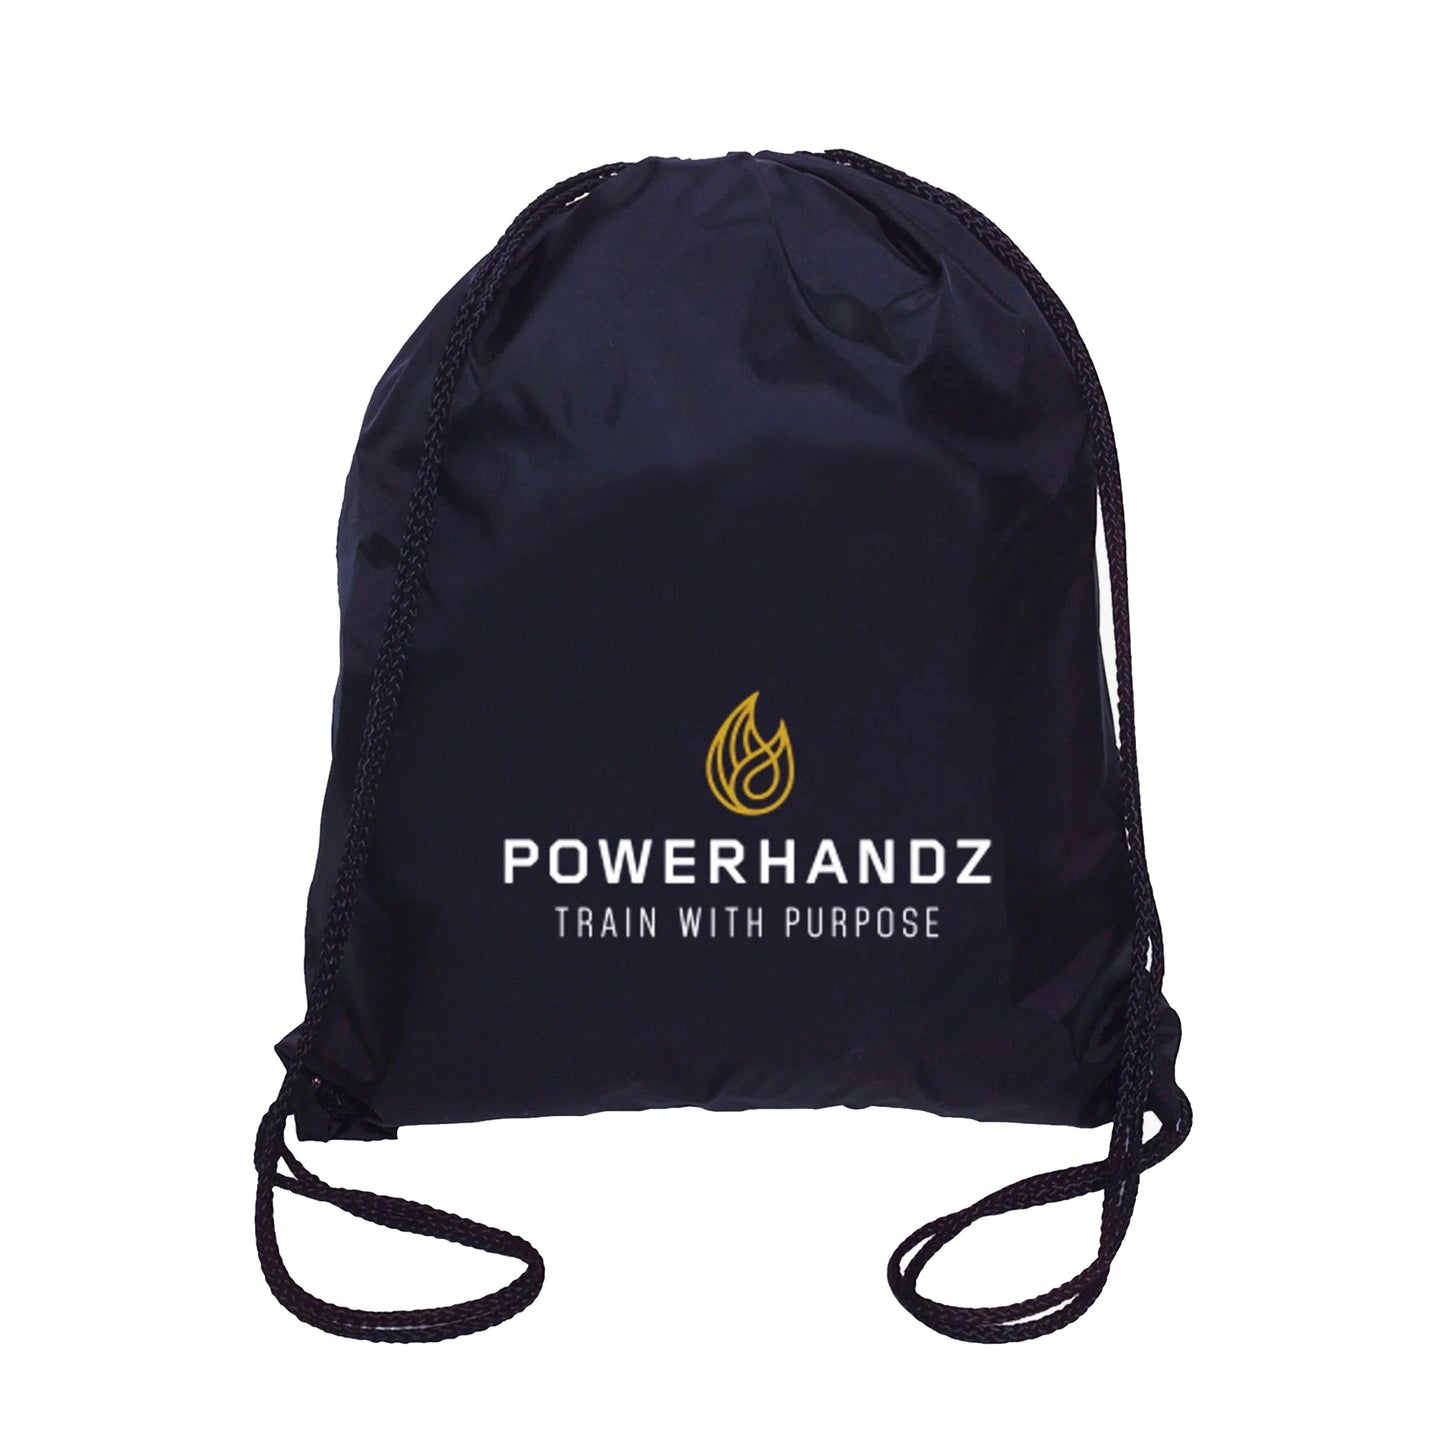 POWERHANDZ Drawstring Bag: Conveniently Carry All Your Gear - POWERHANDZ